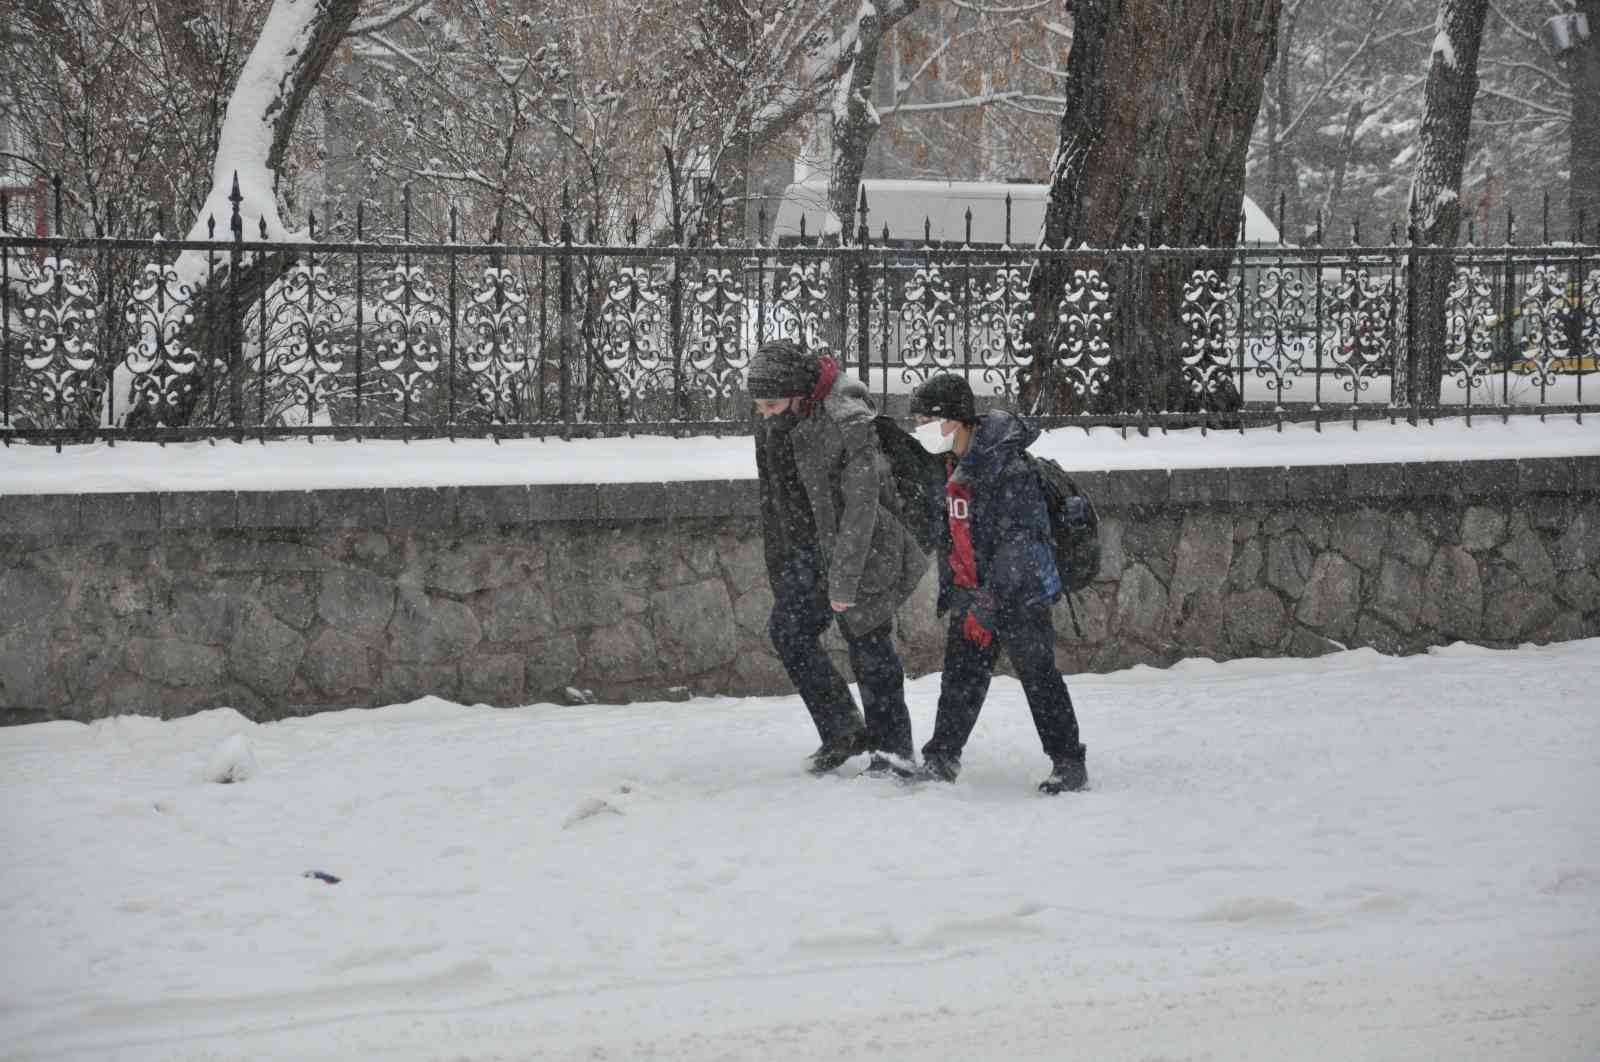 Kars’ta yoğun kar yağışı, okullar tatil edildi #kars